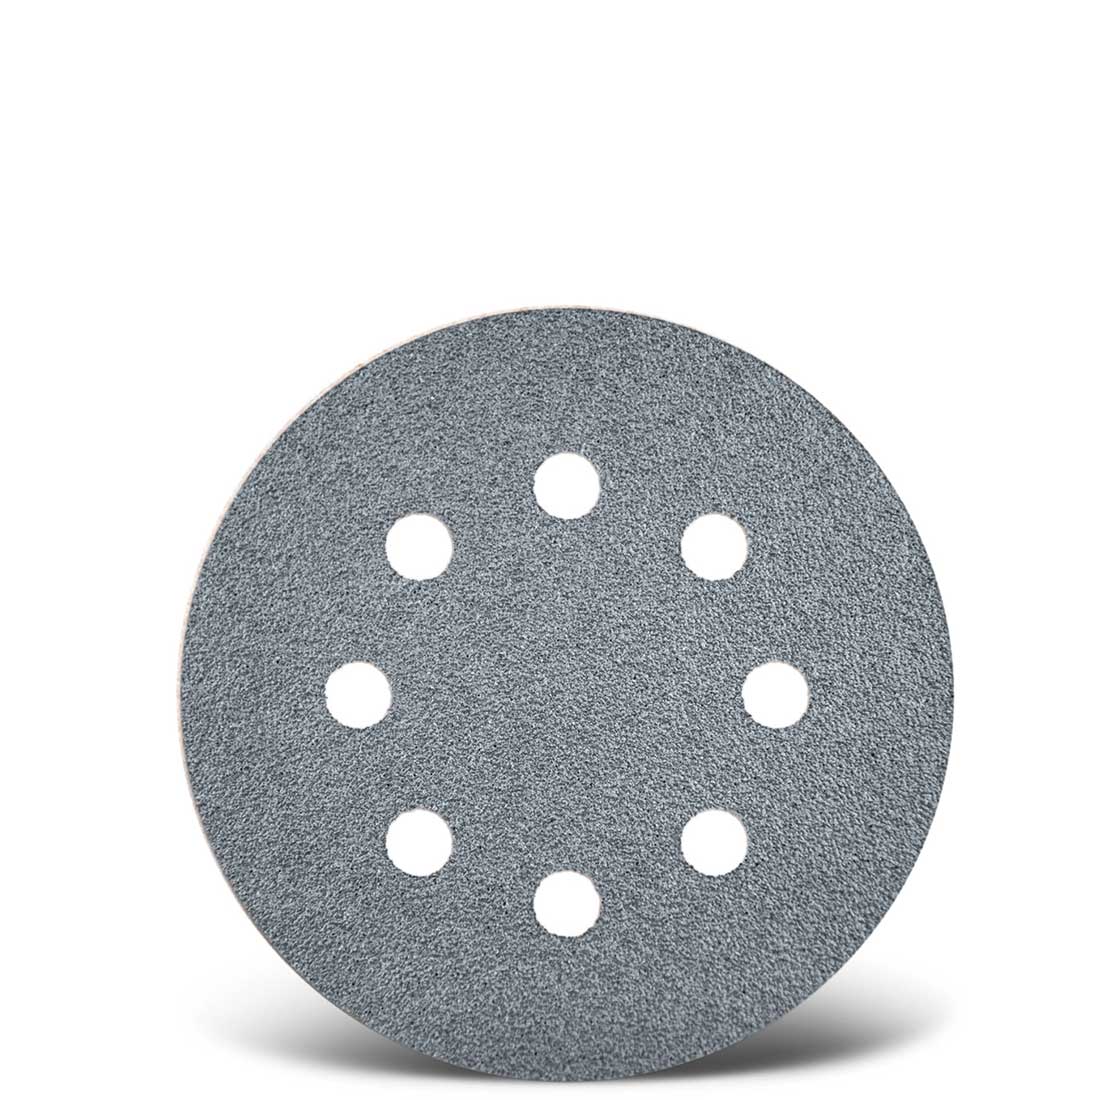 MENZER hook & loop sanding discs for random orbital sanders, G40–400, Ø 125 mm / 8 hole / semi-friable aluminium oxide